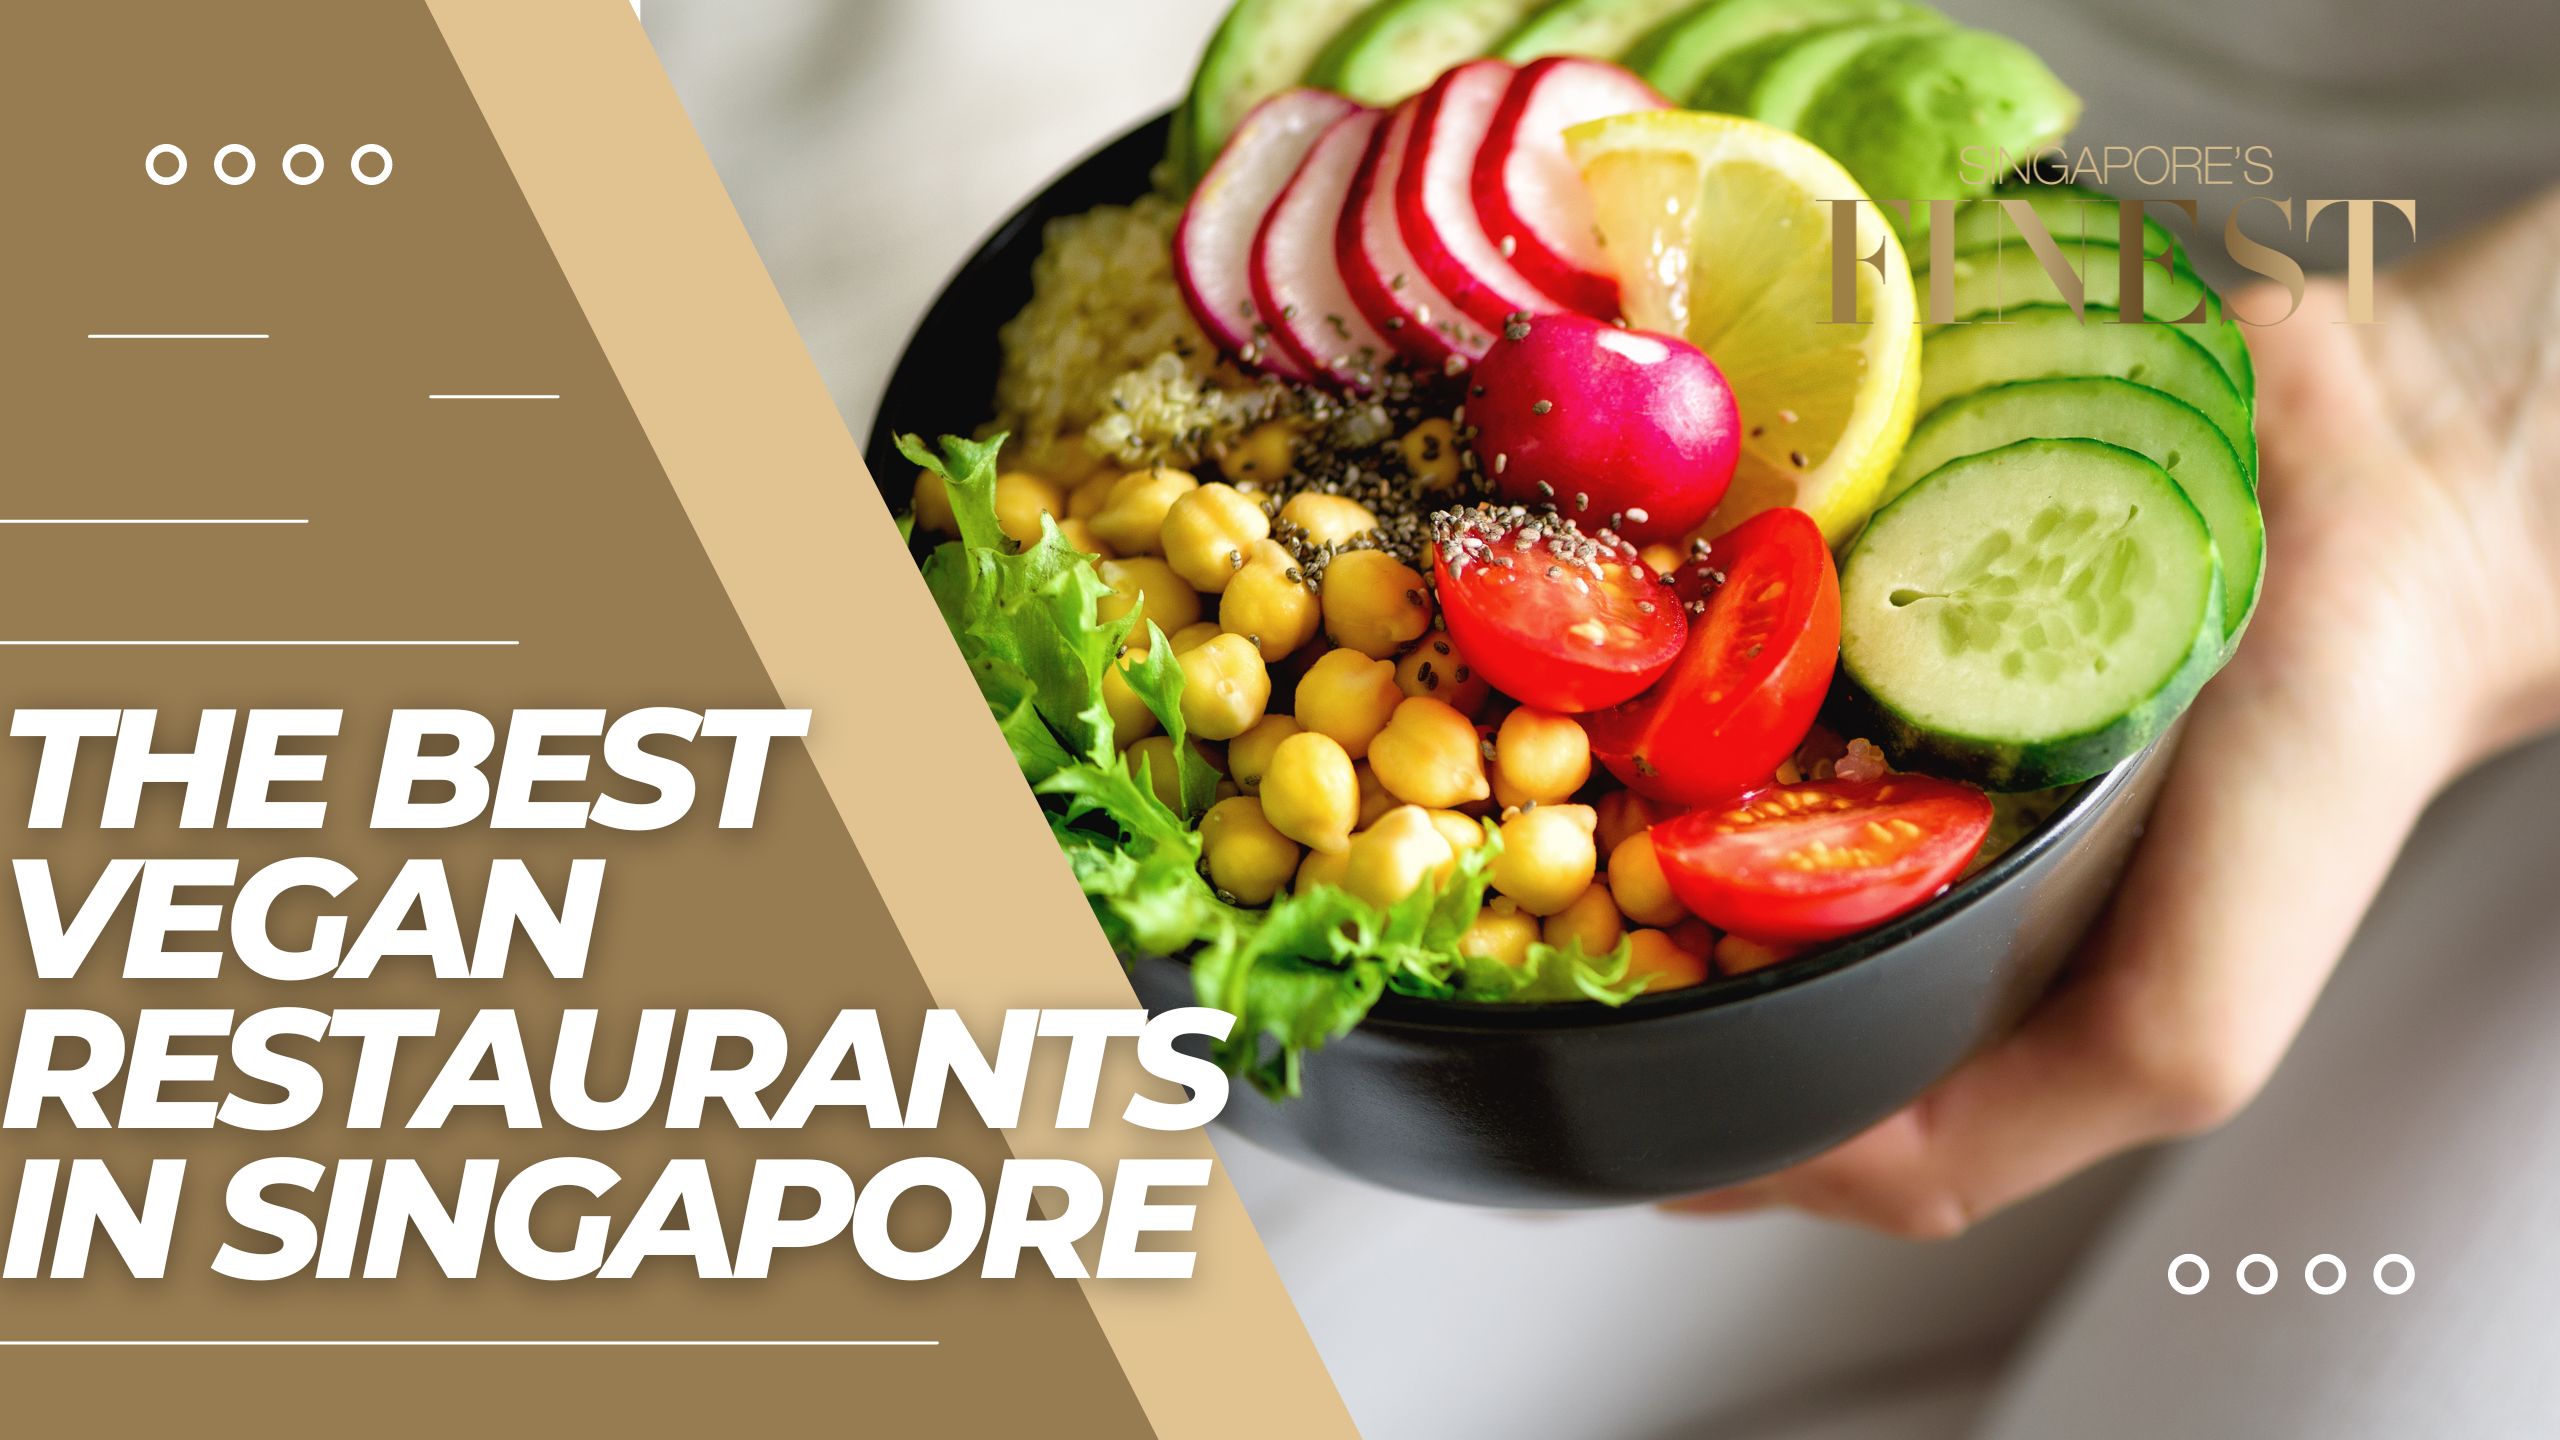 The Finest Vegan Restaurants in Singapore